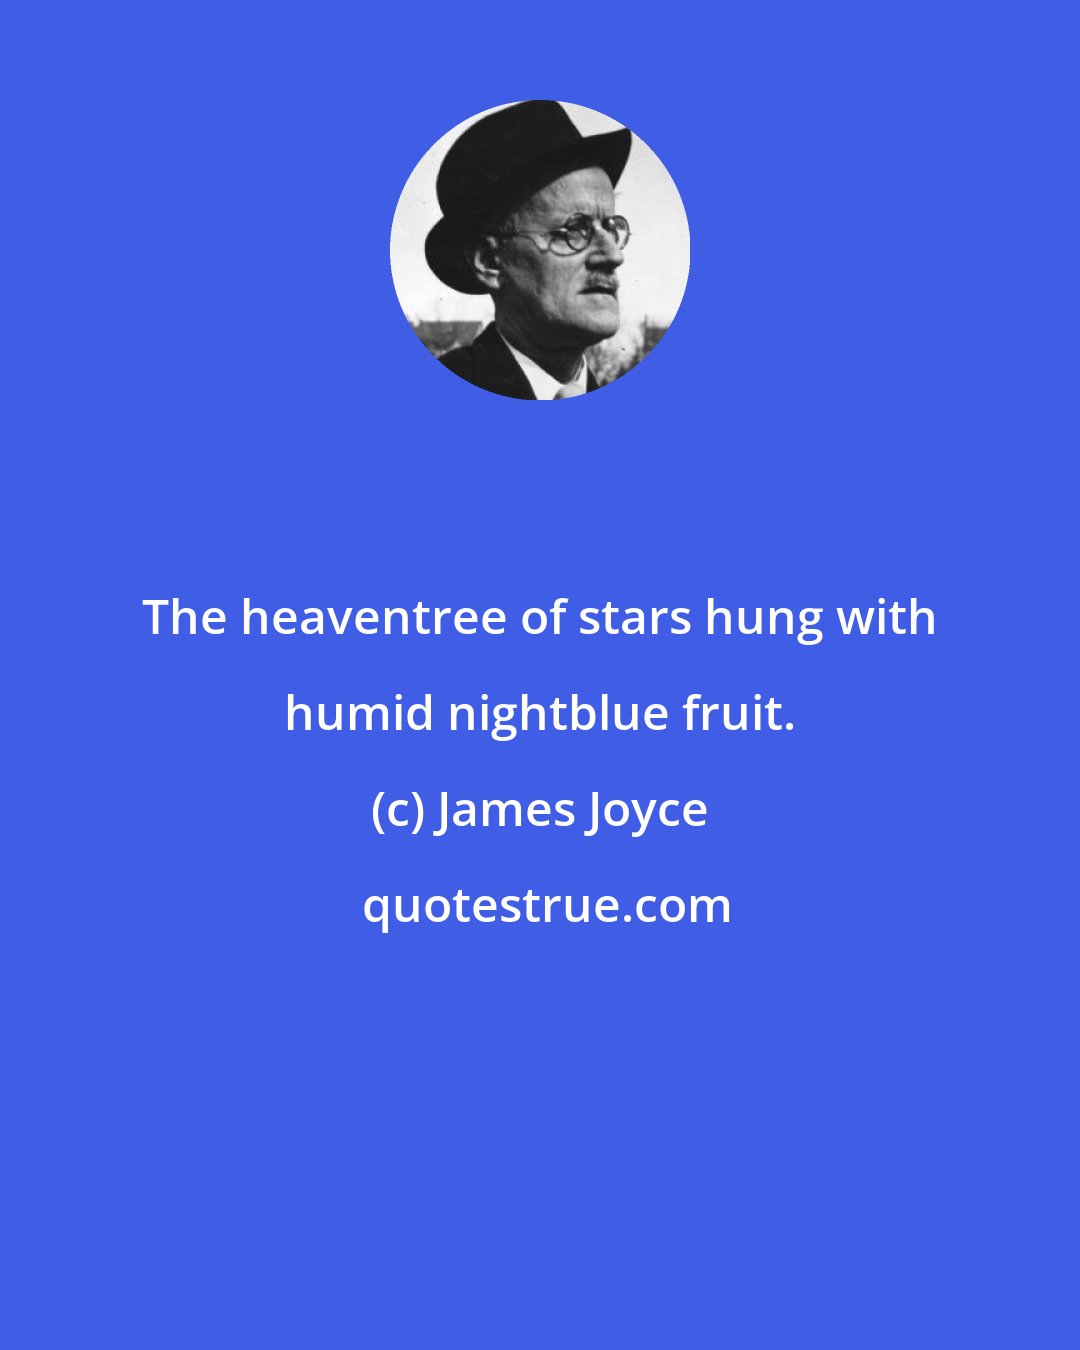 James Joyce: The heaventree of stars hung with humid nightblue fruit.